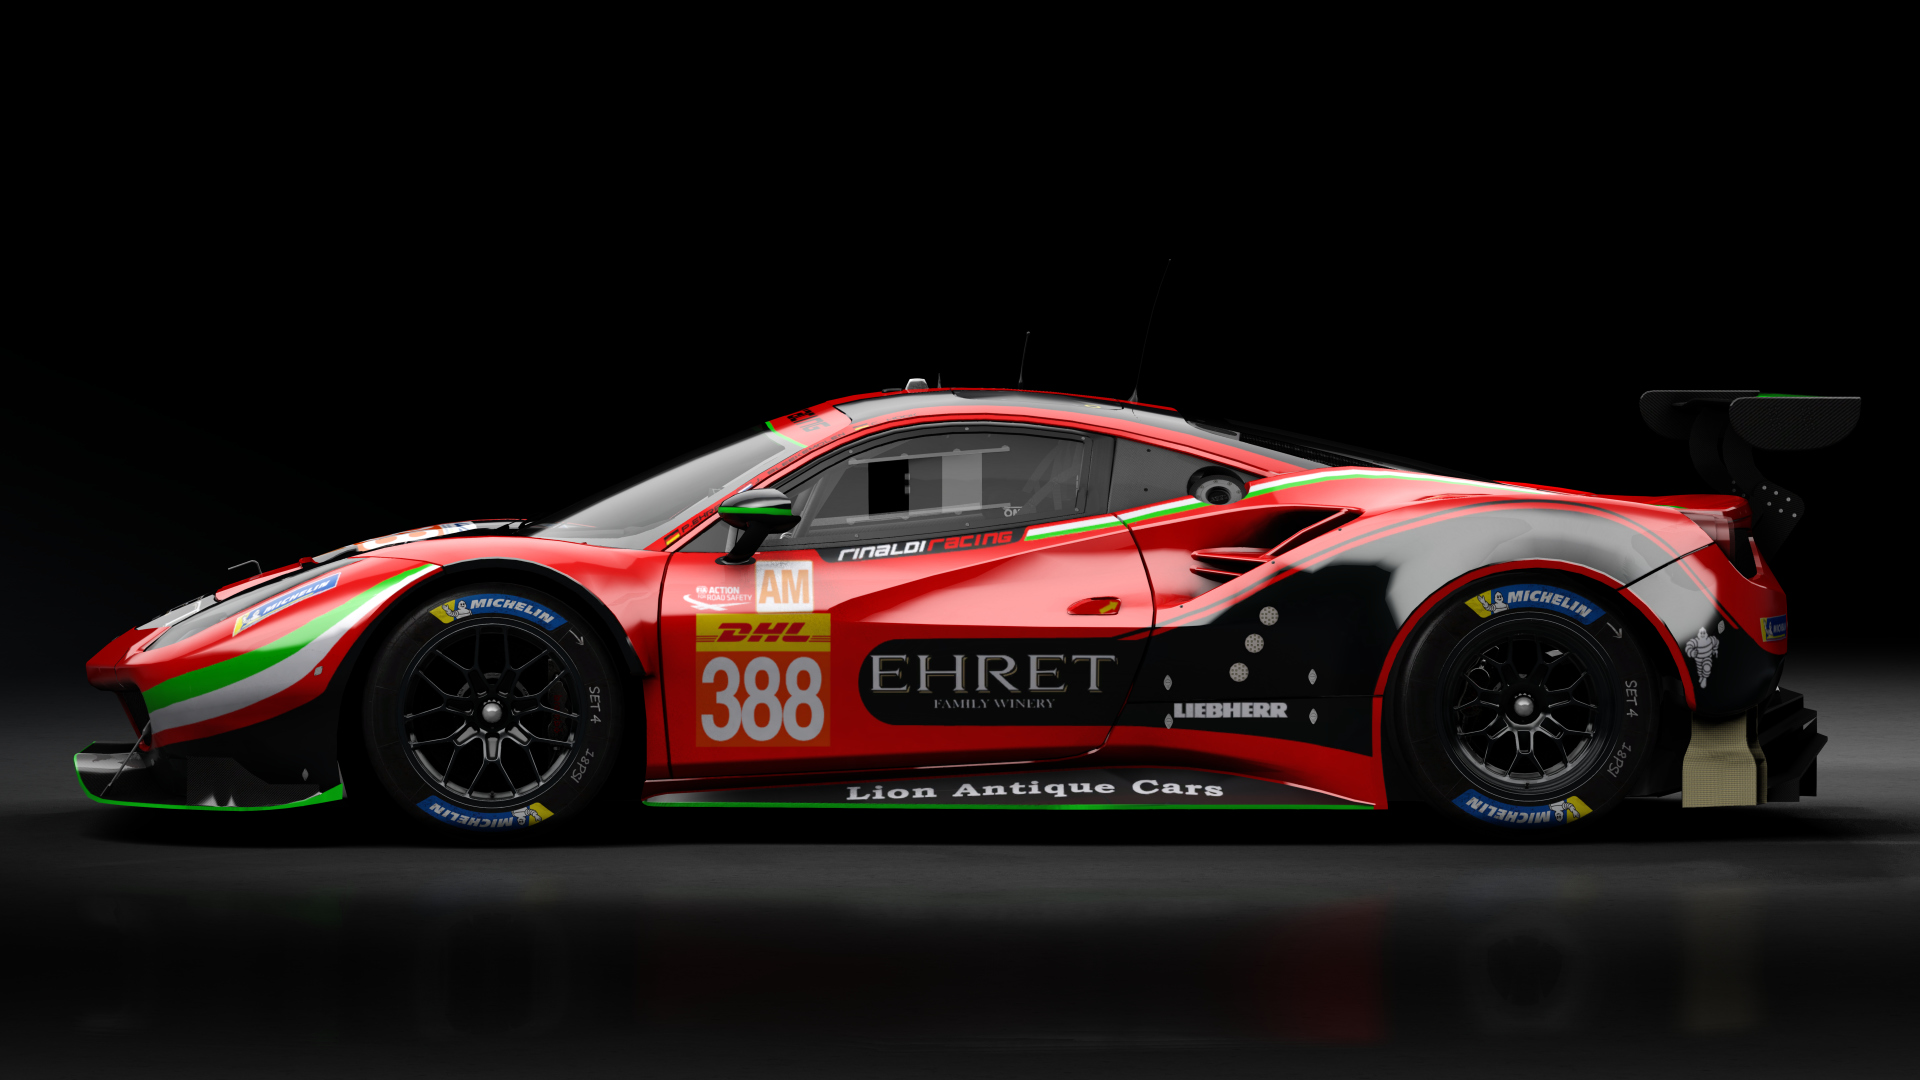 2018 Ferrari 488 GTE Evo [Michelotto], skin 2021 #388 Rinaldi Racing WEC